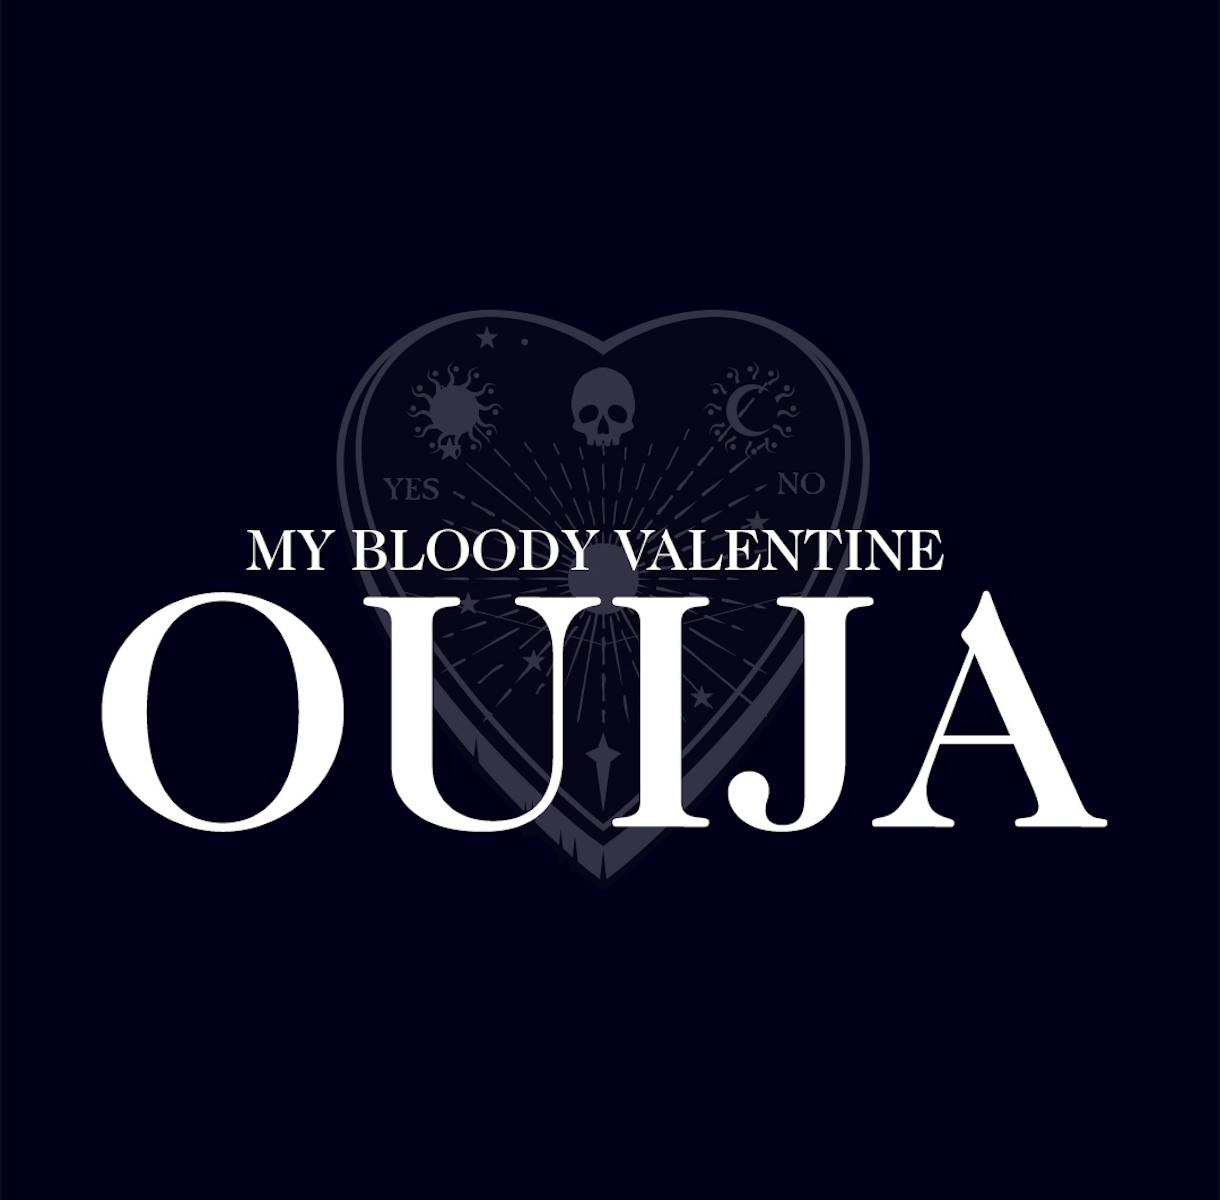 MY BLOODY VALENTINE - Ouija